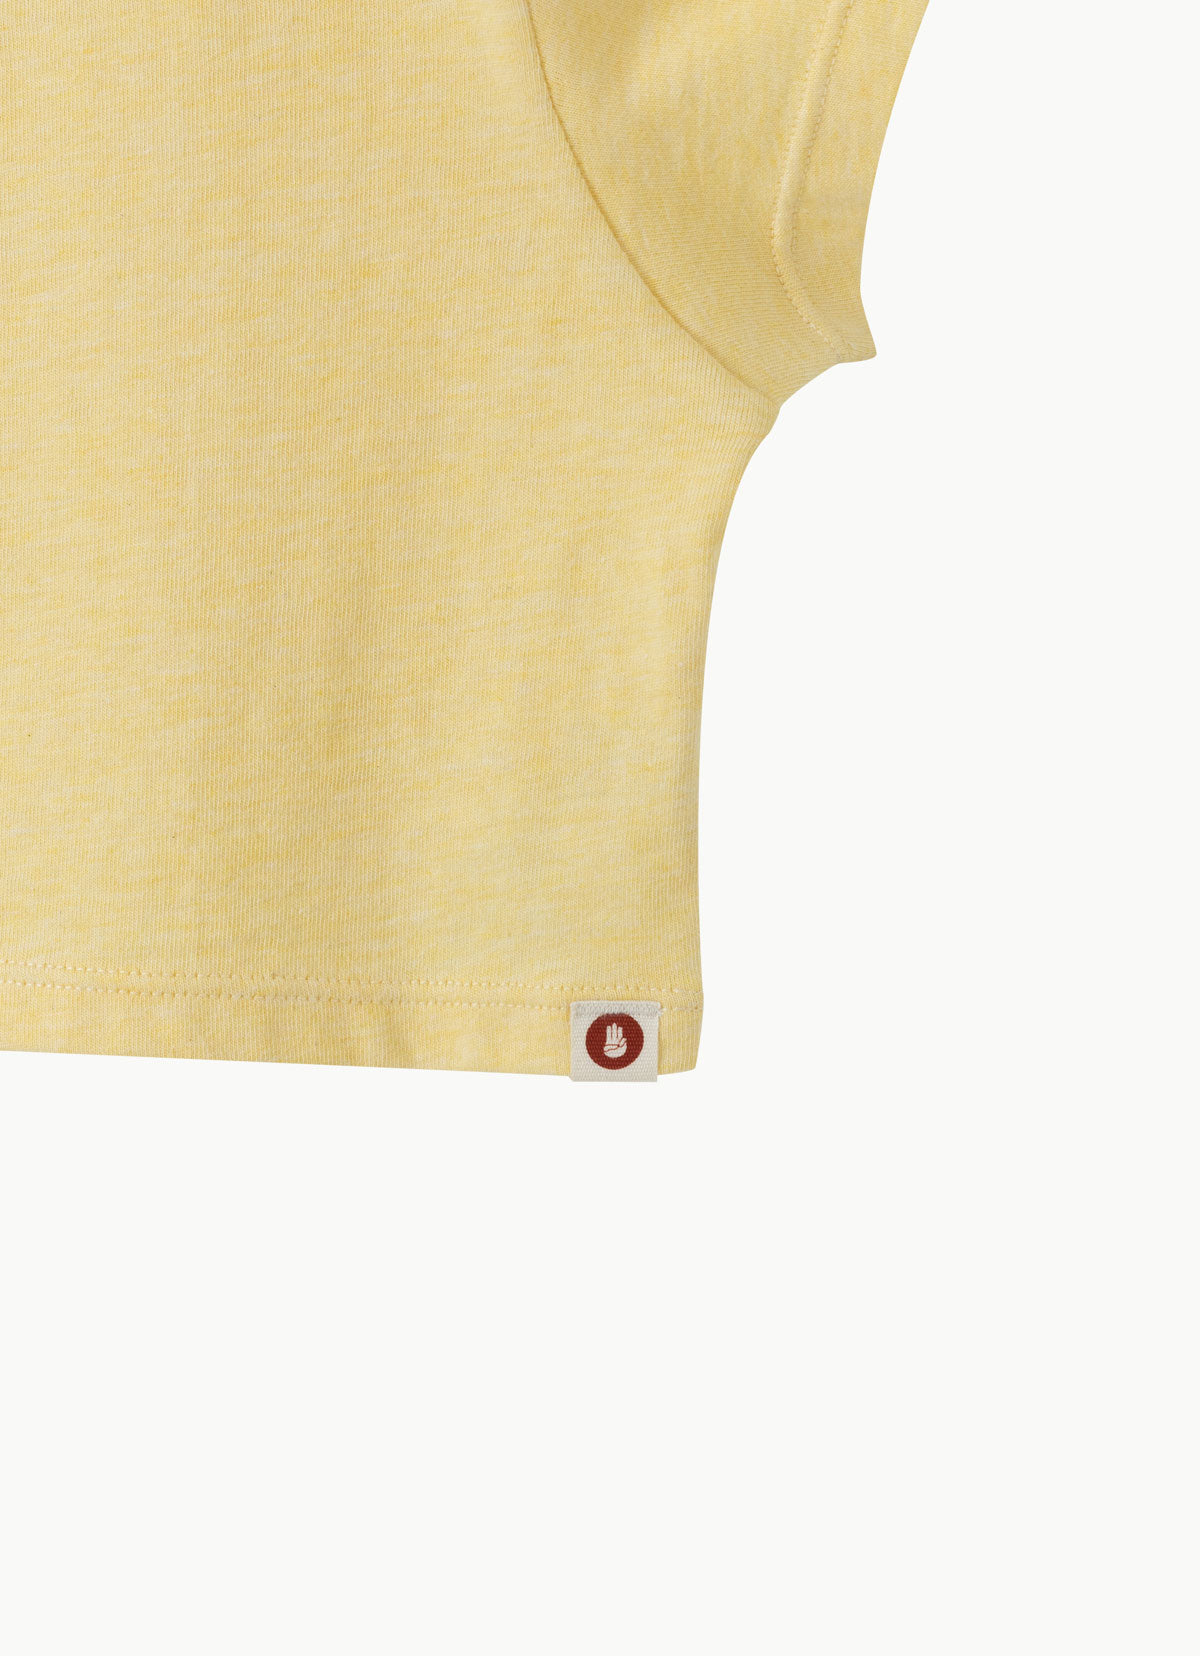 Kona short sleeve #2_Melange Yellow